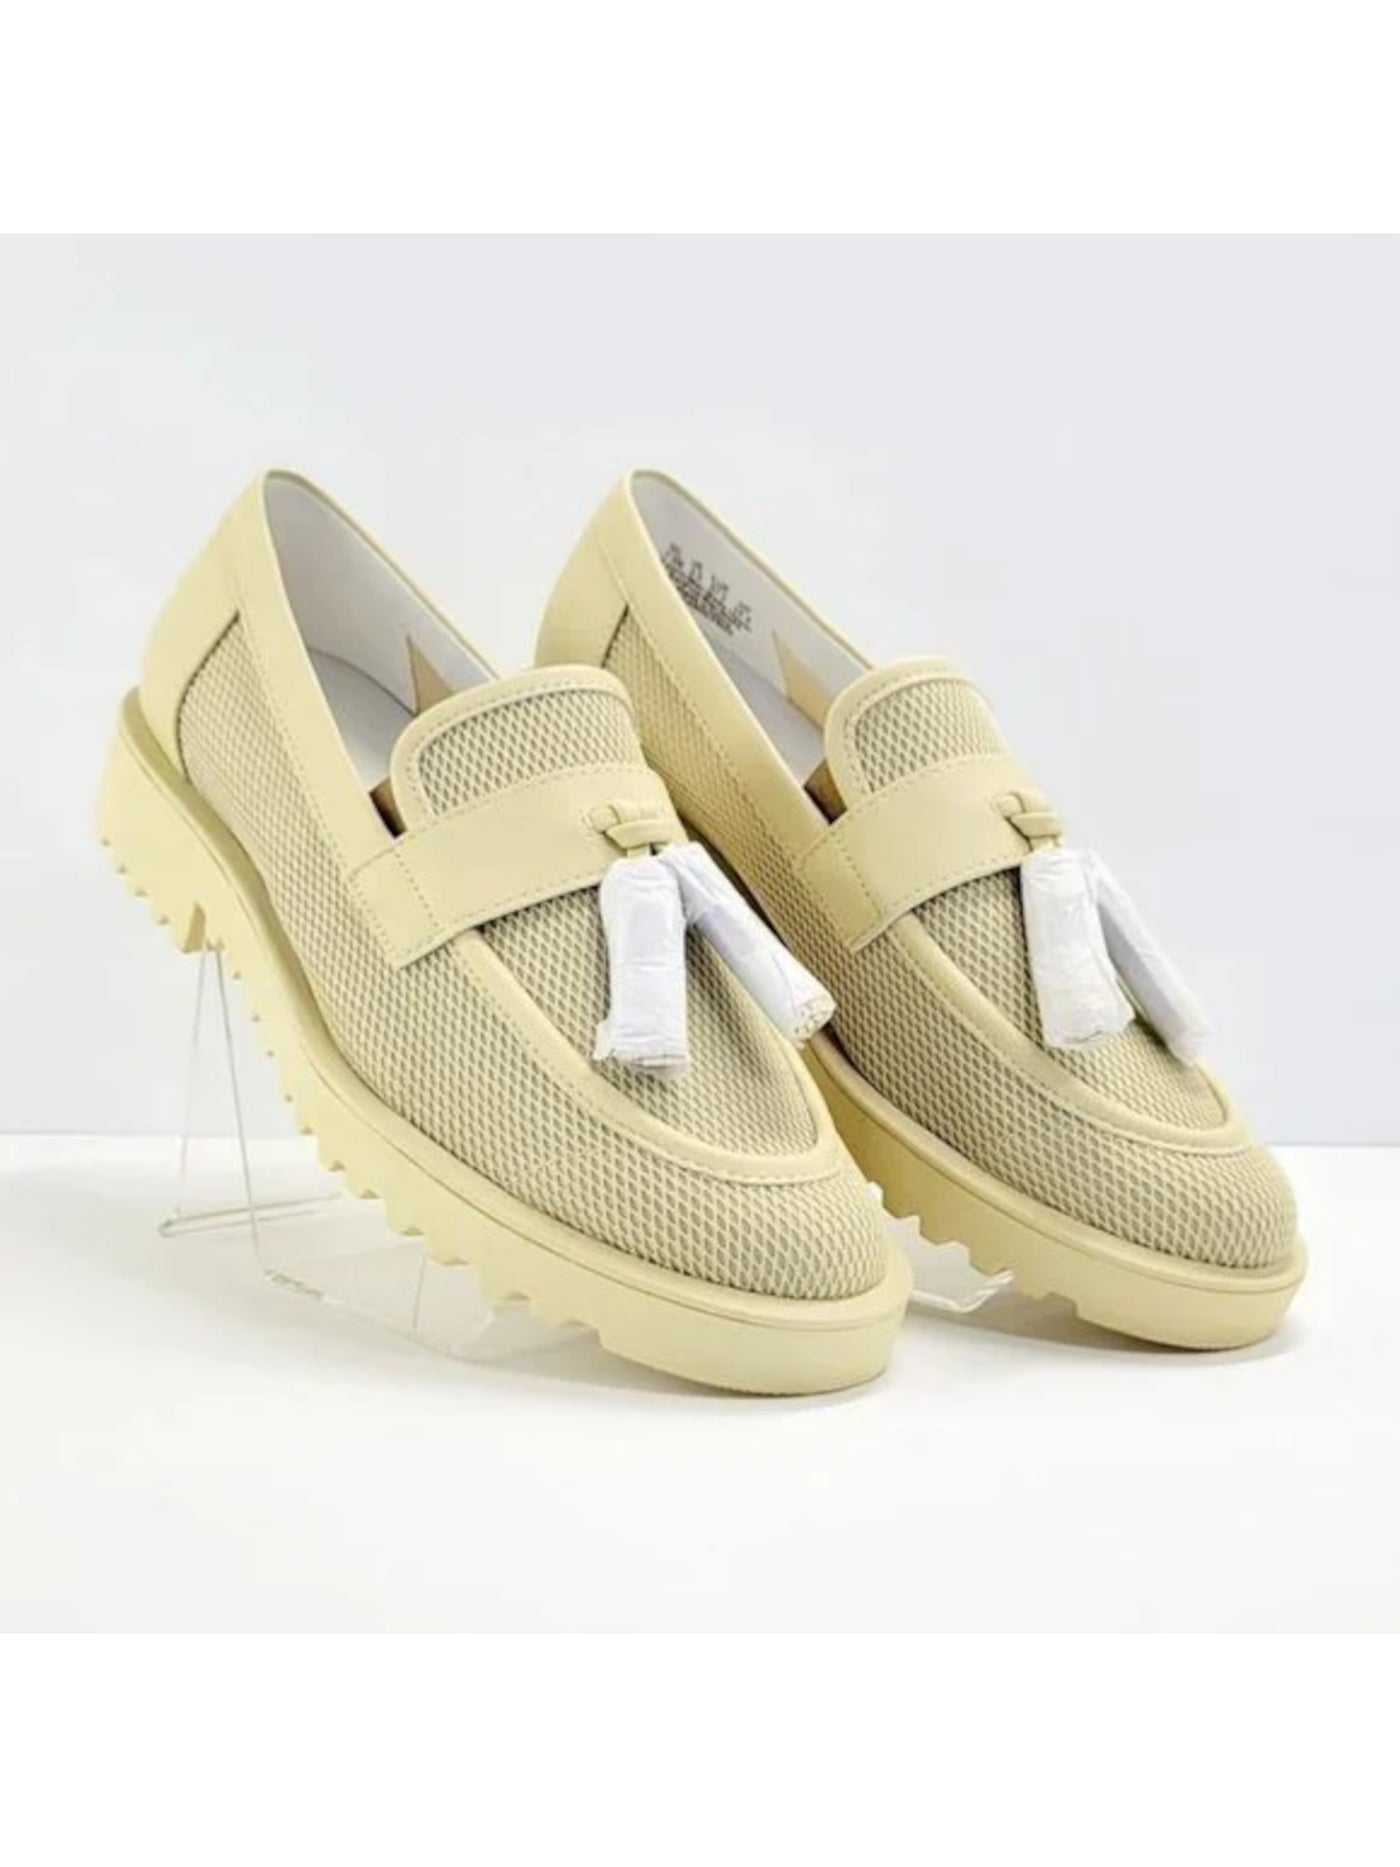 FRANCO SARTO Womens Yellow Comfort Tasseled Lug Sole Carolynn Round Toe Block Heel Slip On Loafers Shoes 7 M